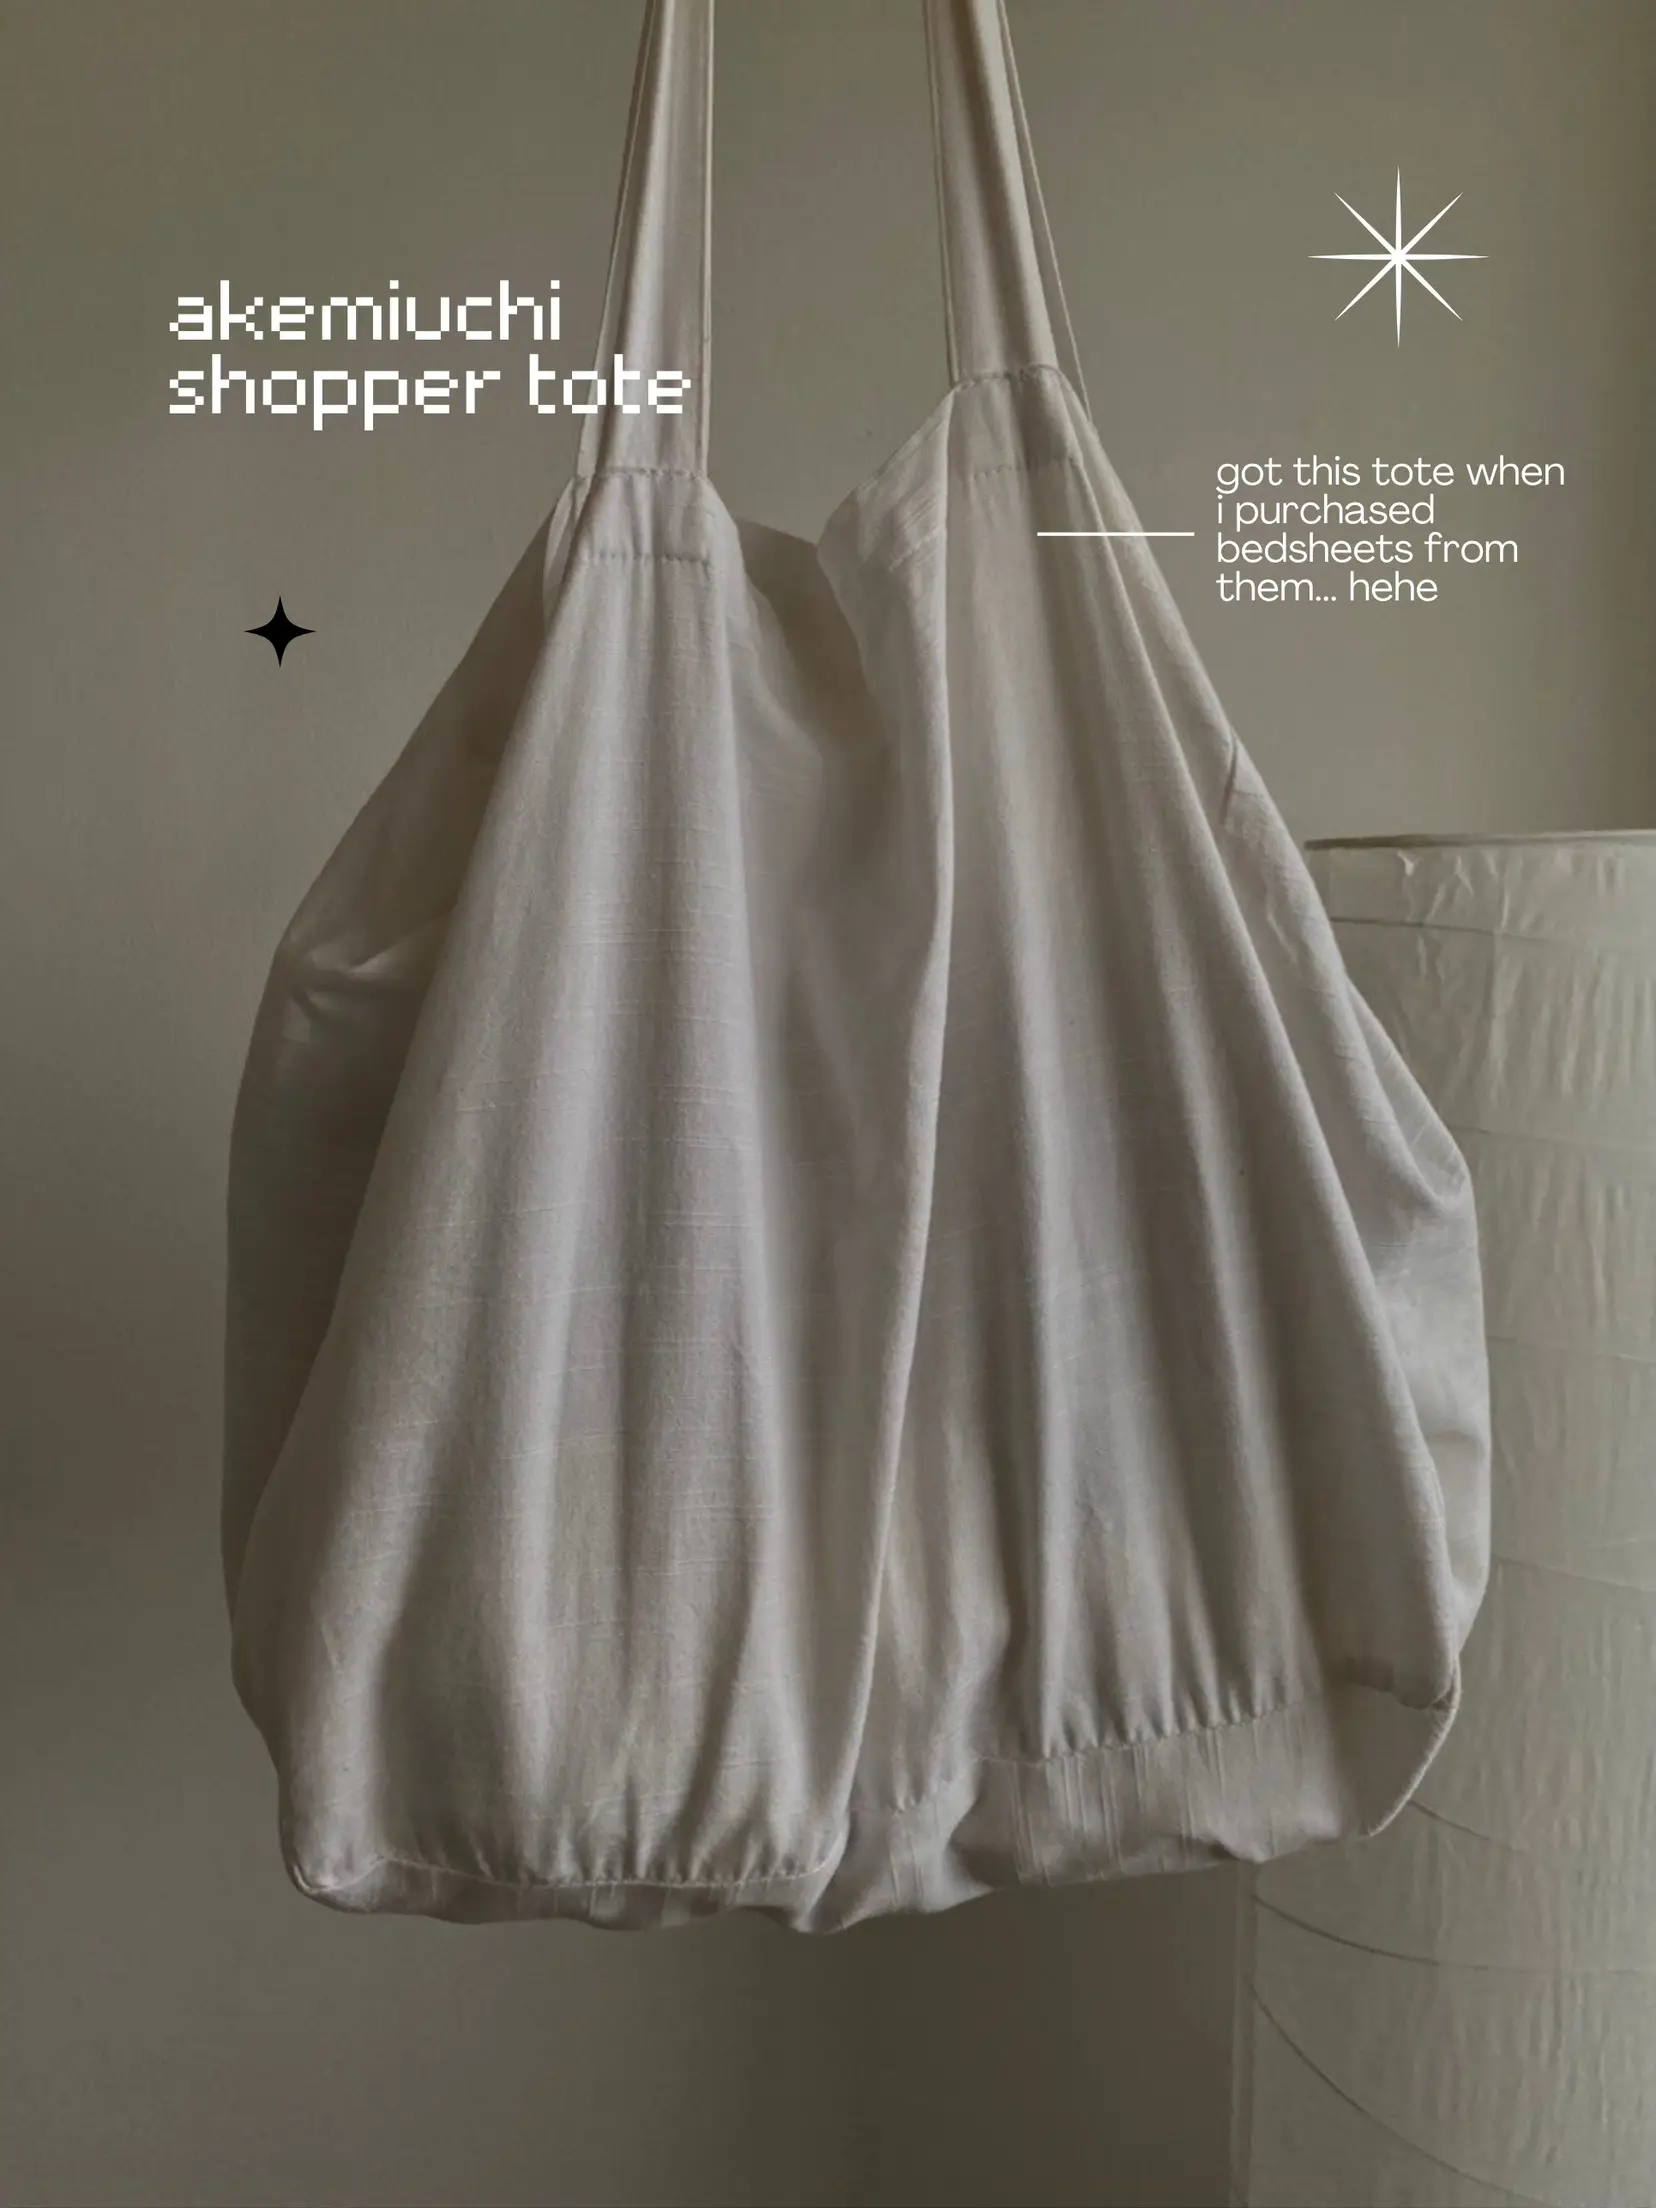 Sentro: Knit a yoga mat carrier/market bag 